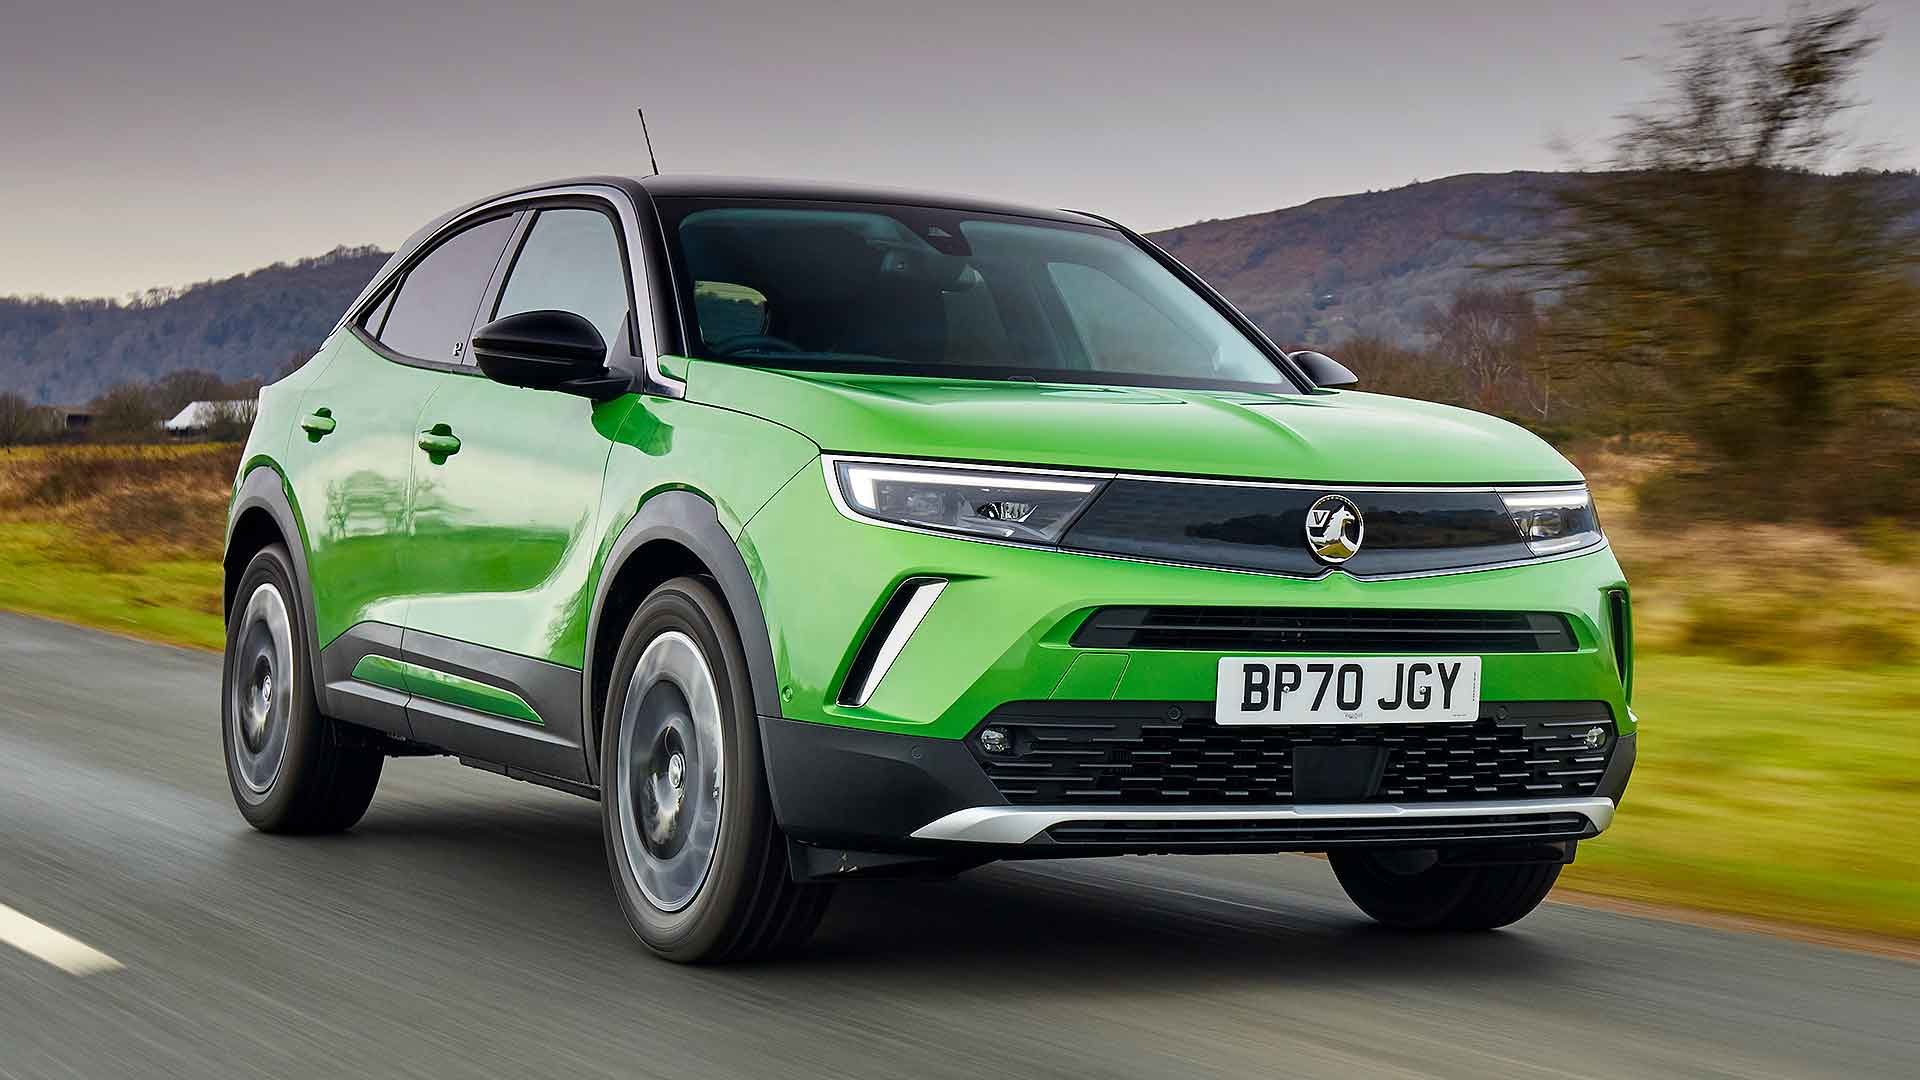 New 2021 Vauxhall Mokka-e in bright metallic green